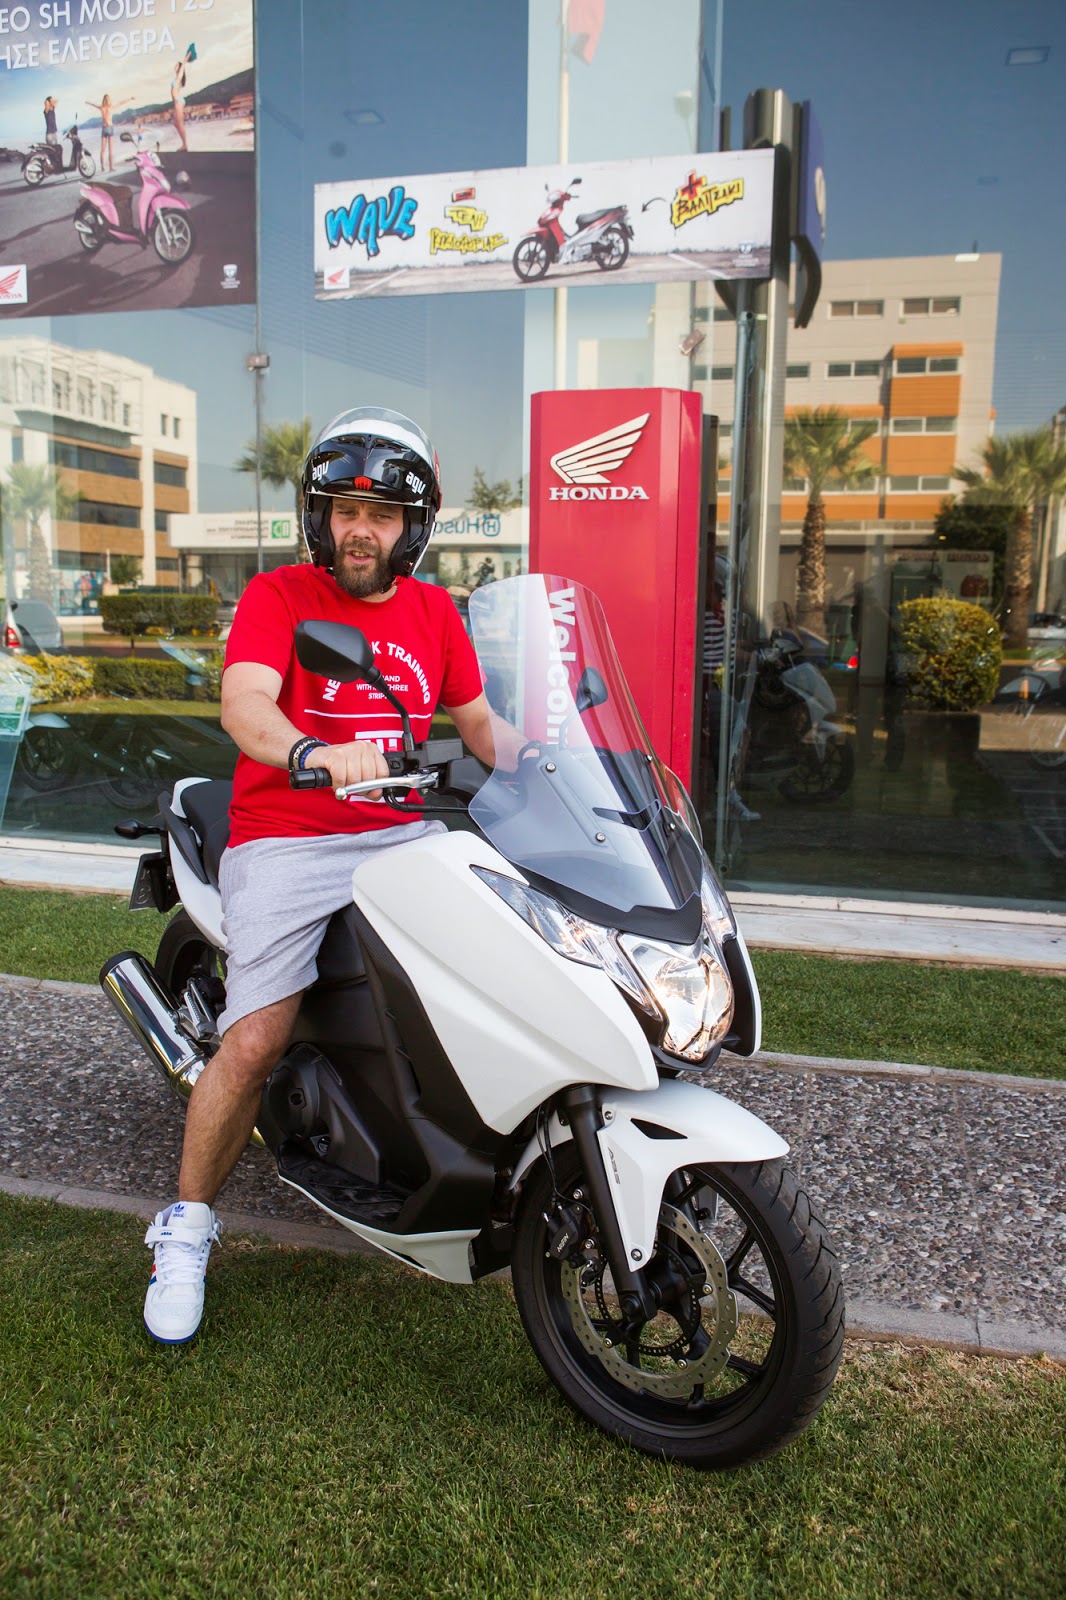 O Μιχάλης Stavento επιλέγει Honda Scooter για τις καθημερινές μετακινήσεις του - Φωτογραφία 3